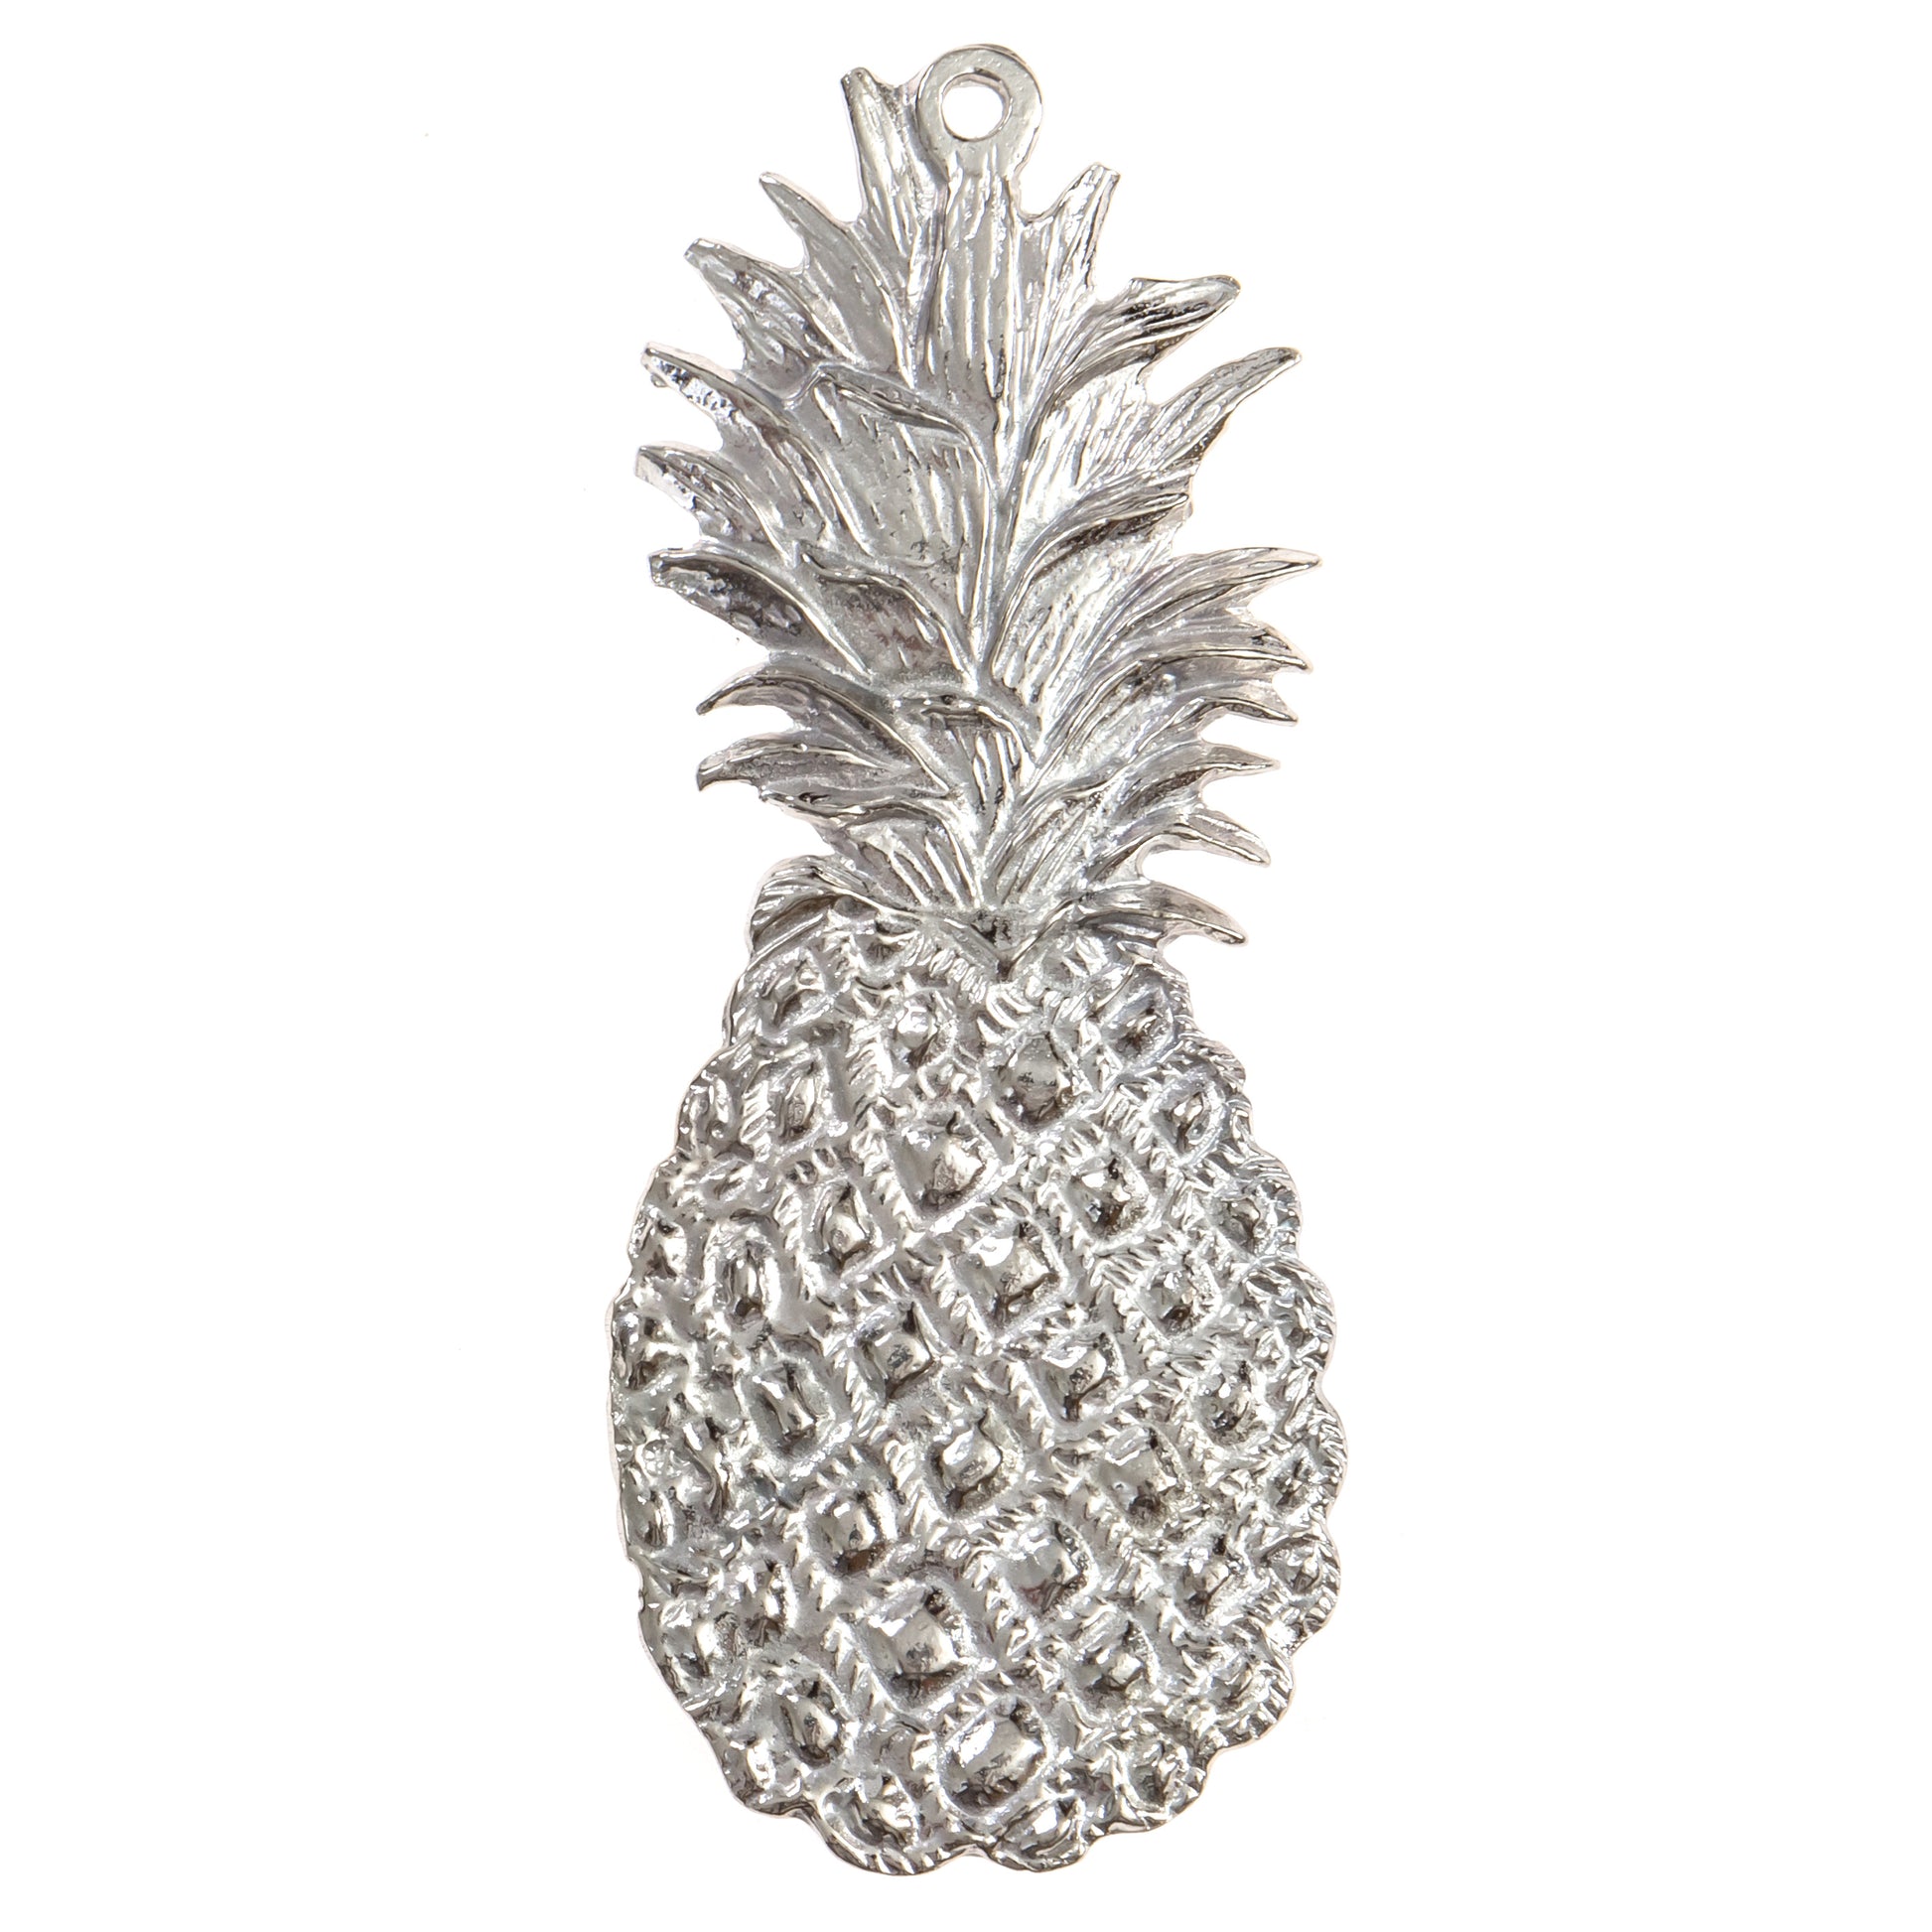 Detailed pineapple 